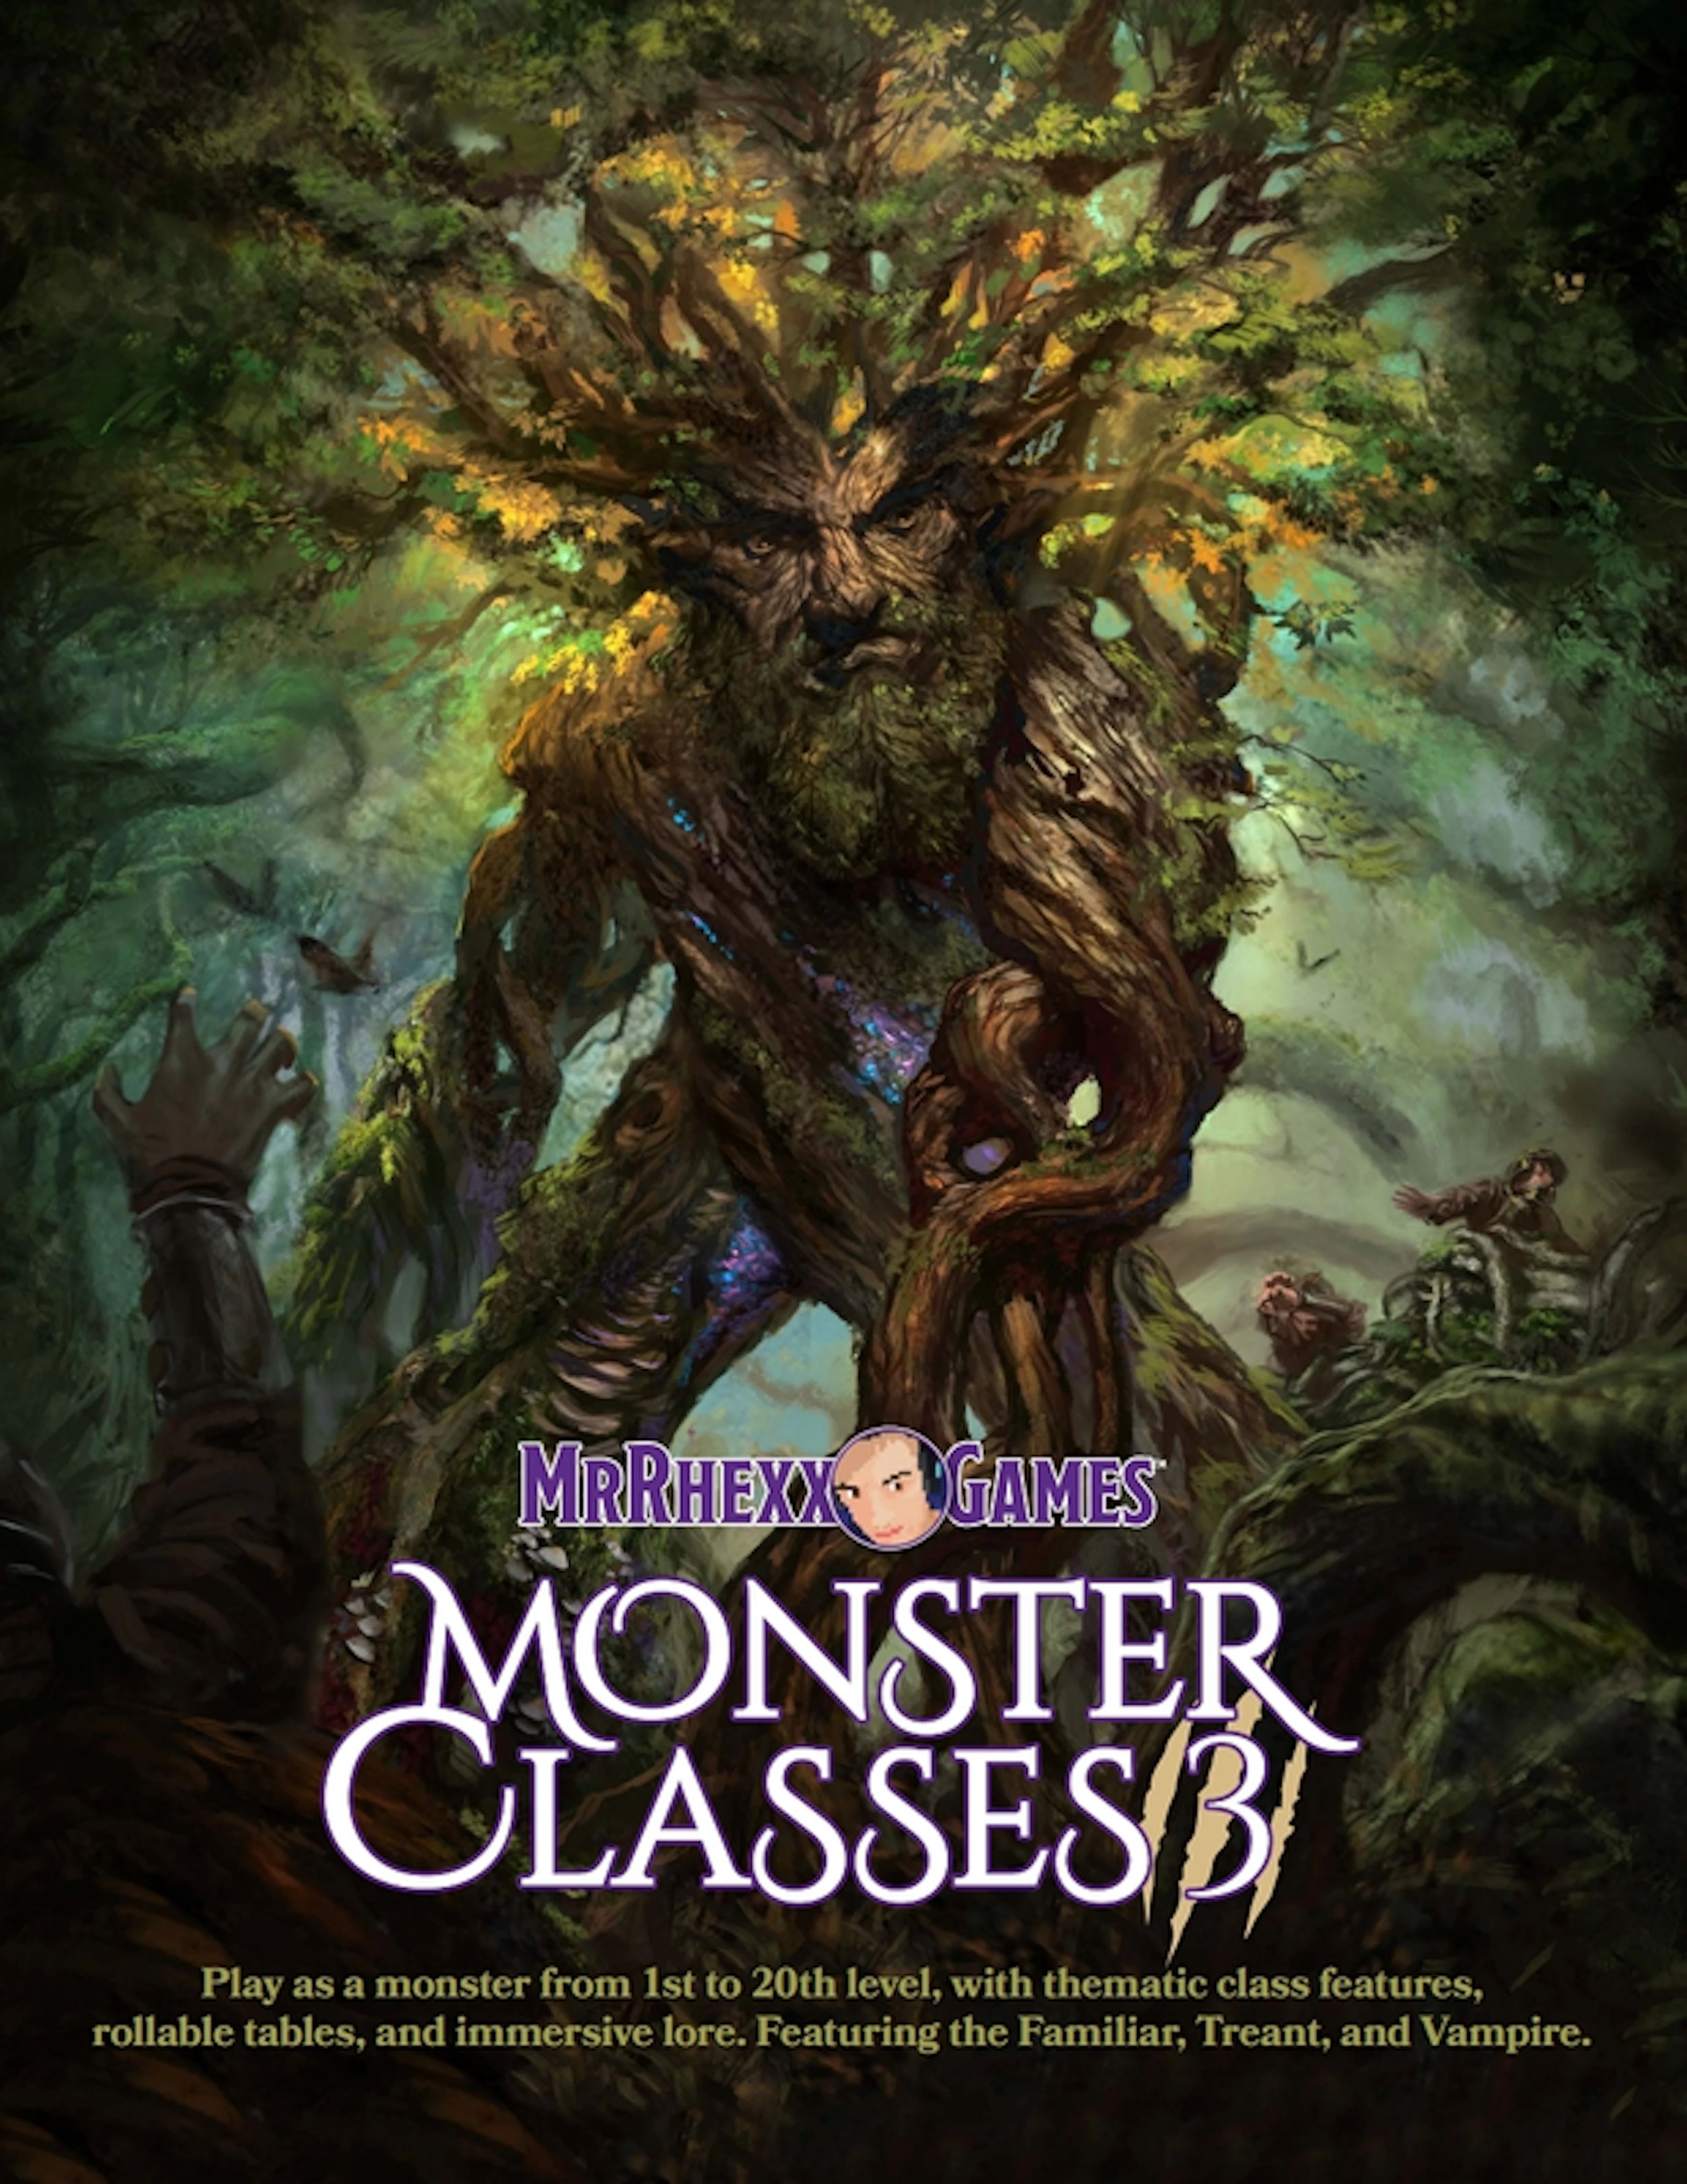 MrRhexx's Monster Classes 3